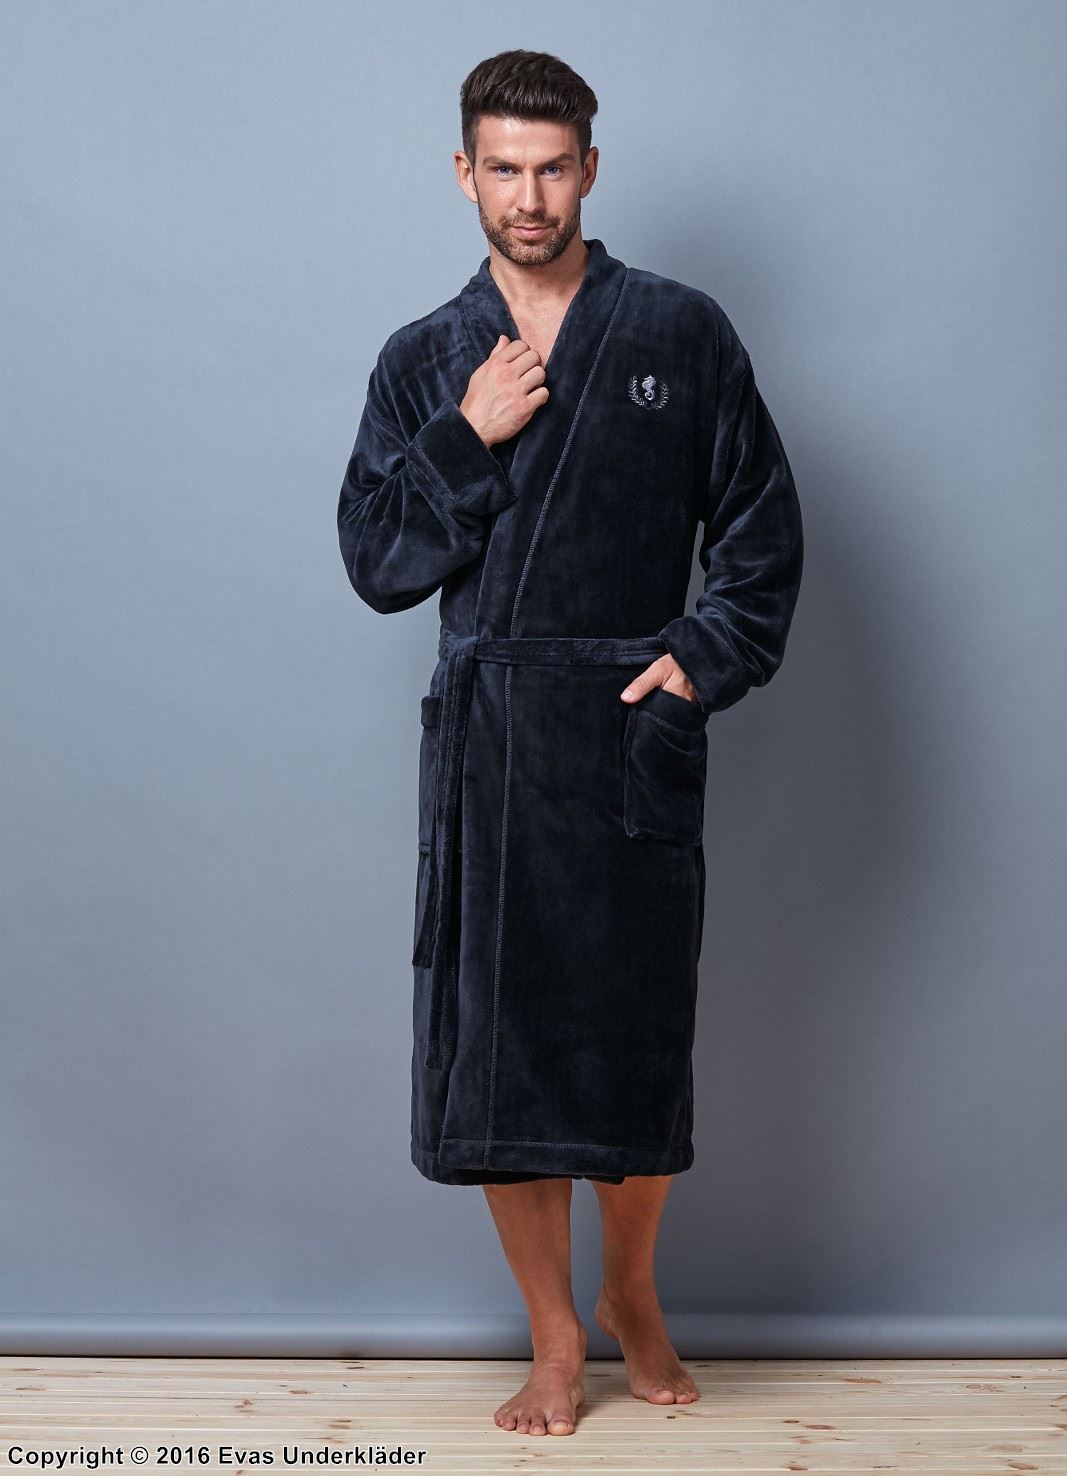 Men's bathrobe, long sleeves, pockets